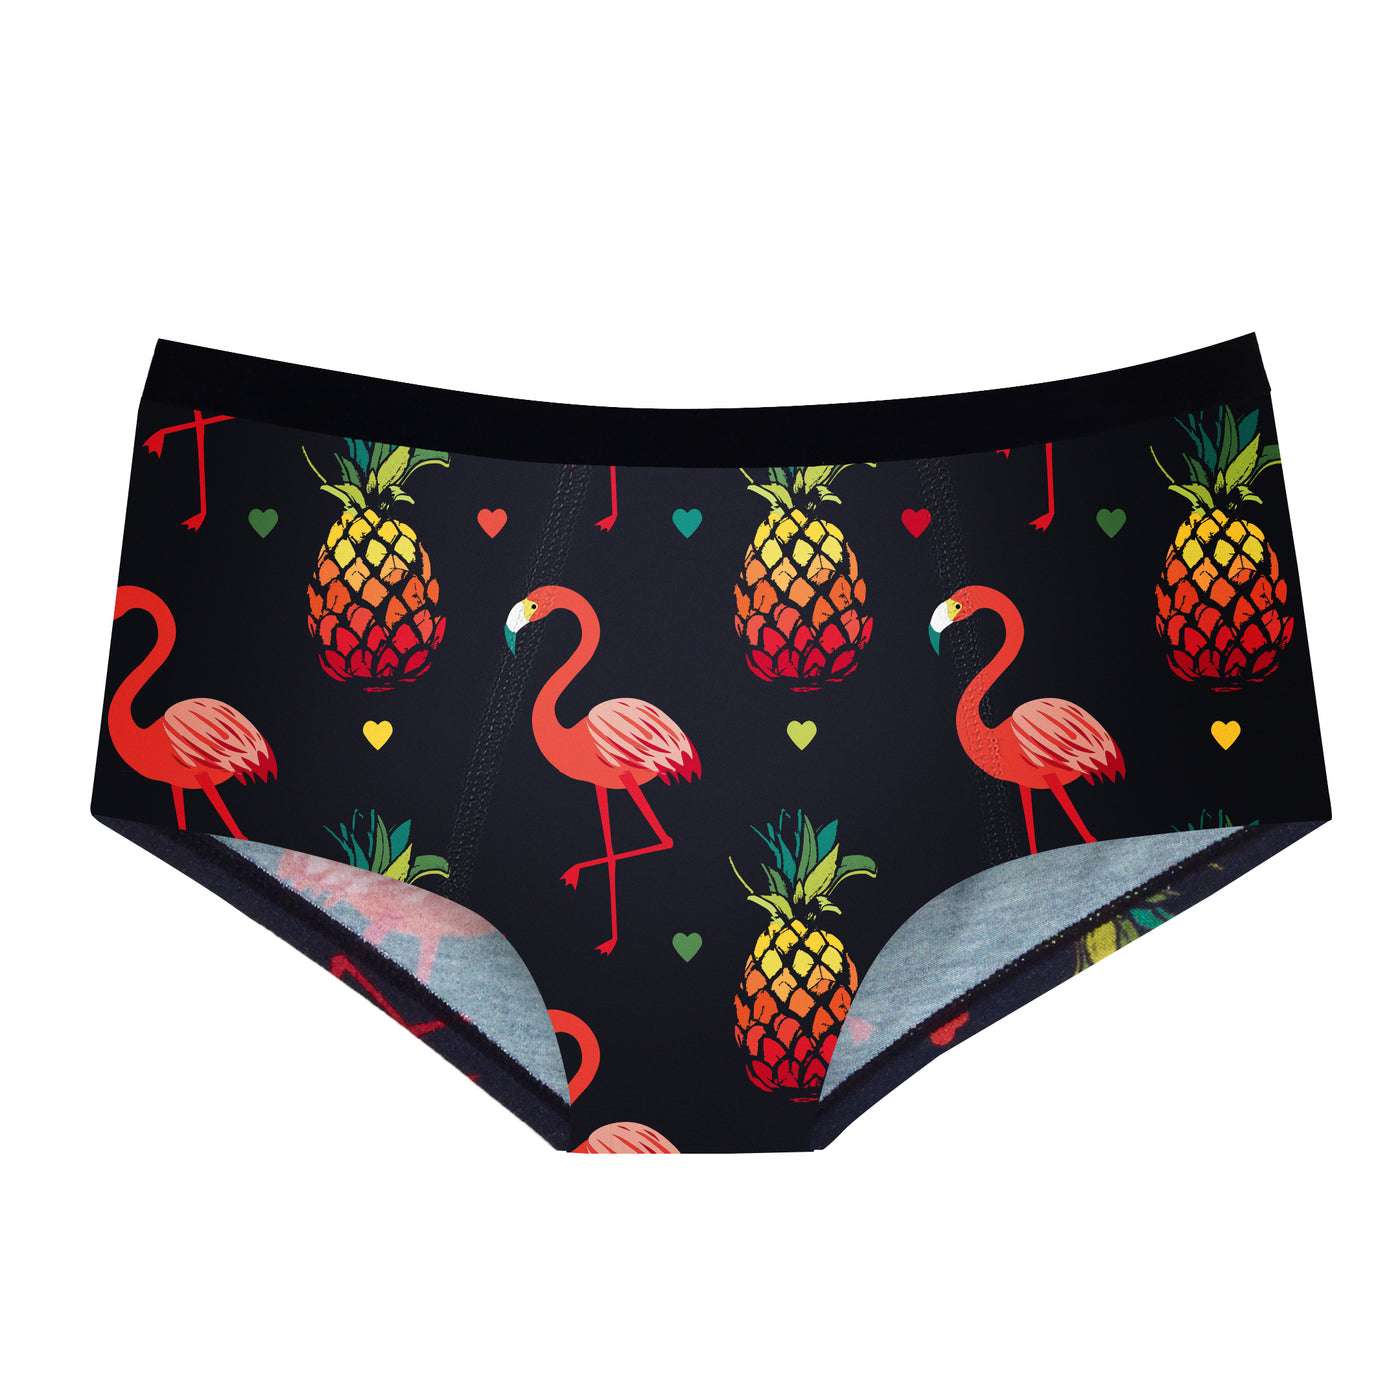 Matchmaker - Cheeky/Cheeky - Flamingos